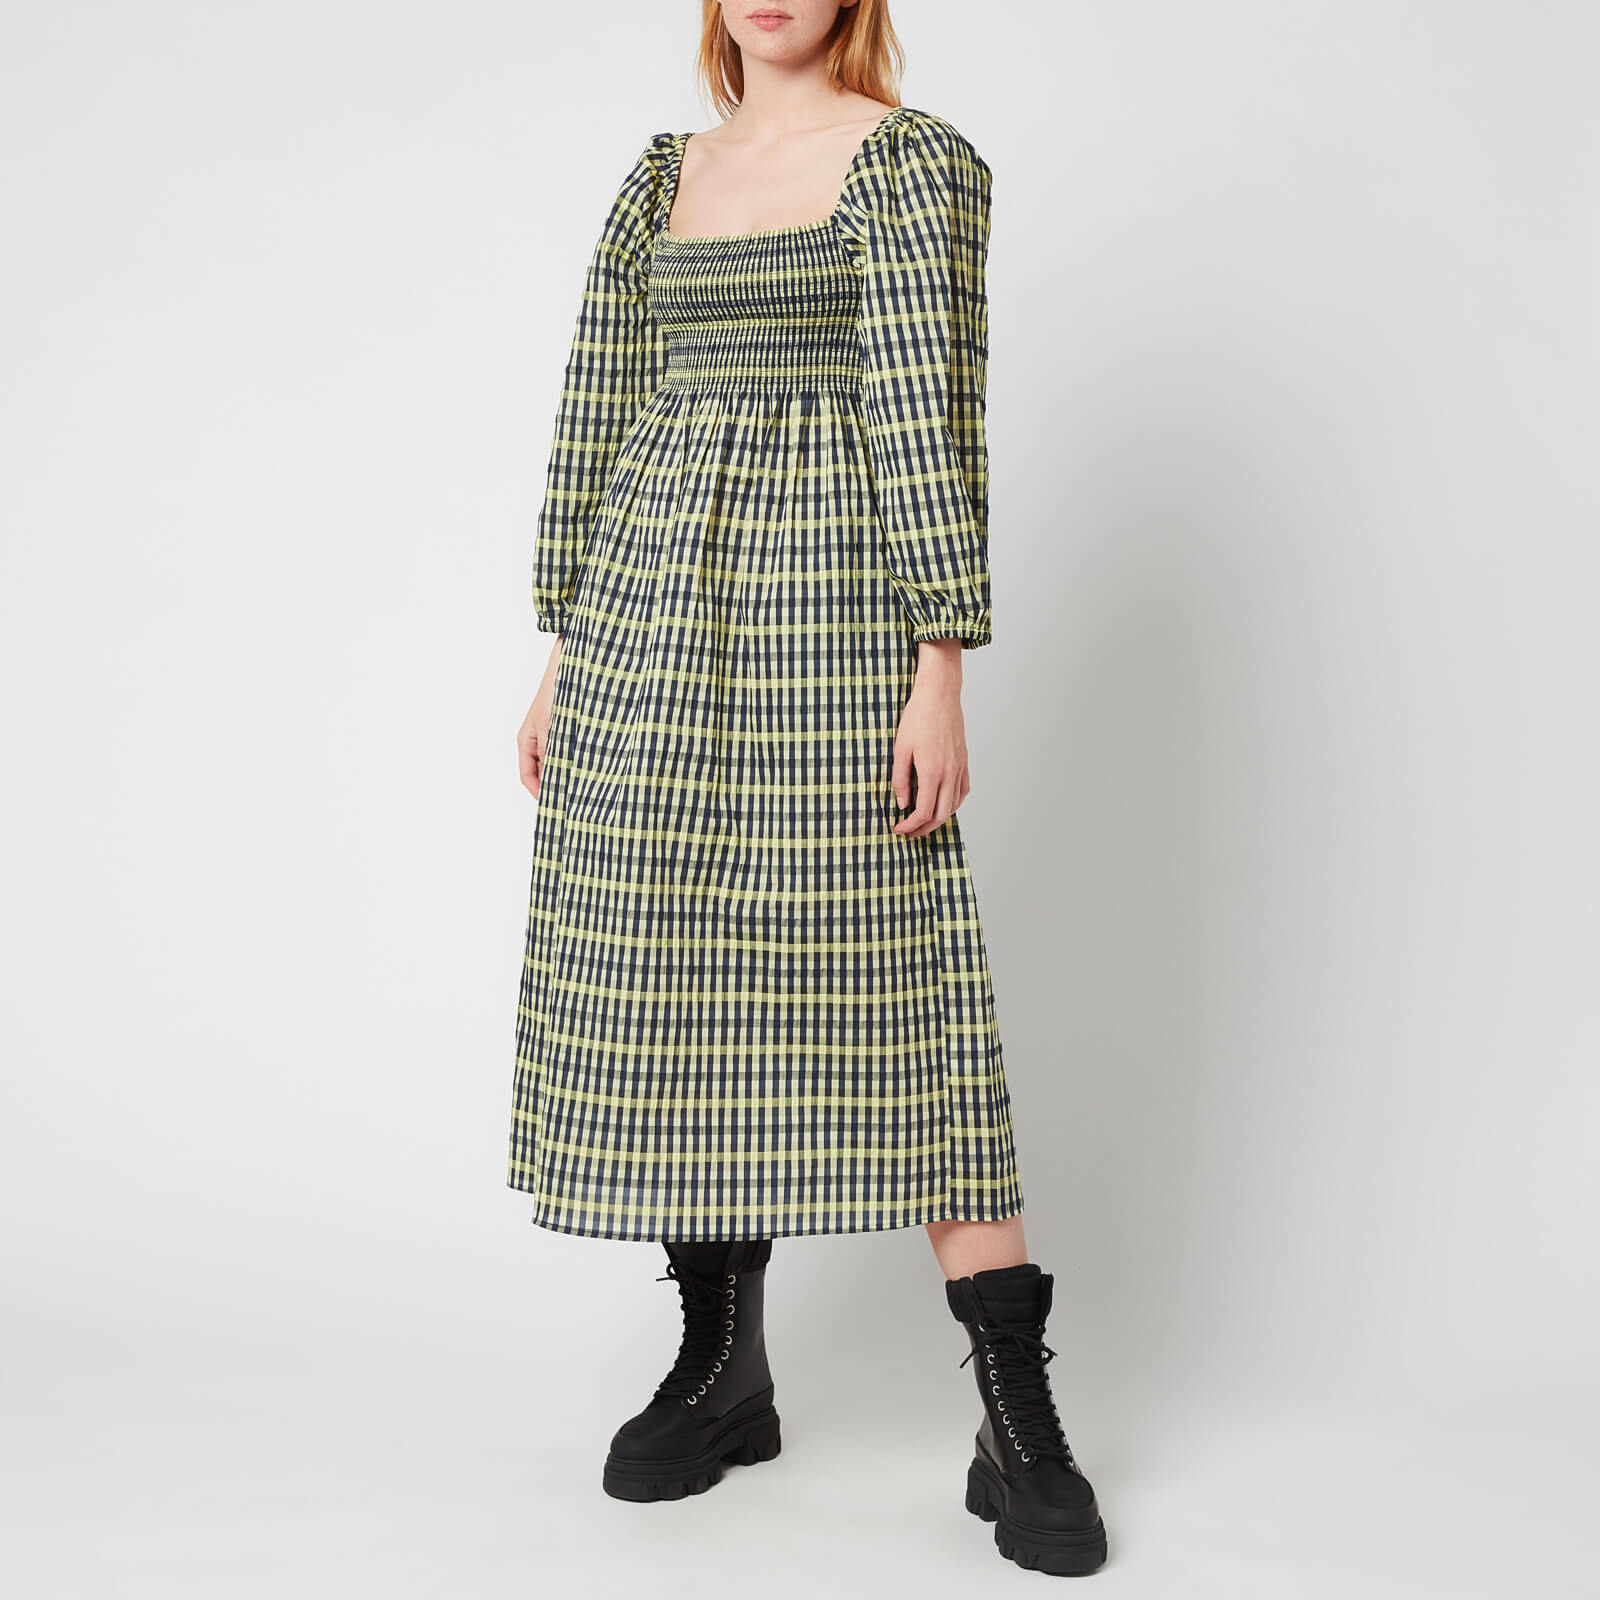 Baum Und Pferdgarten Women's Aquina Dress - Multi - EU 36/UK 8